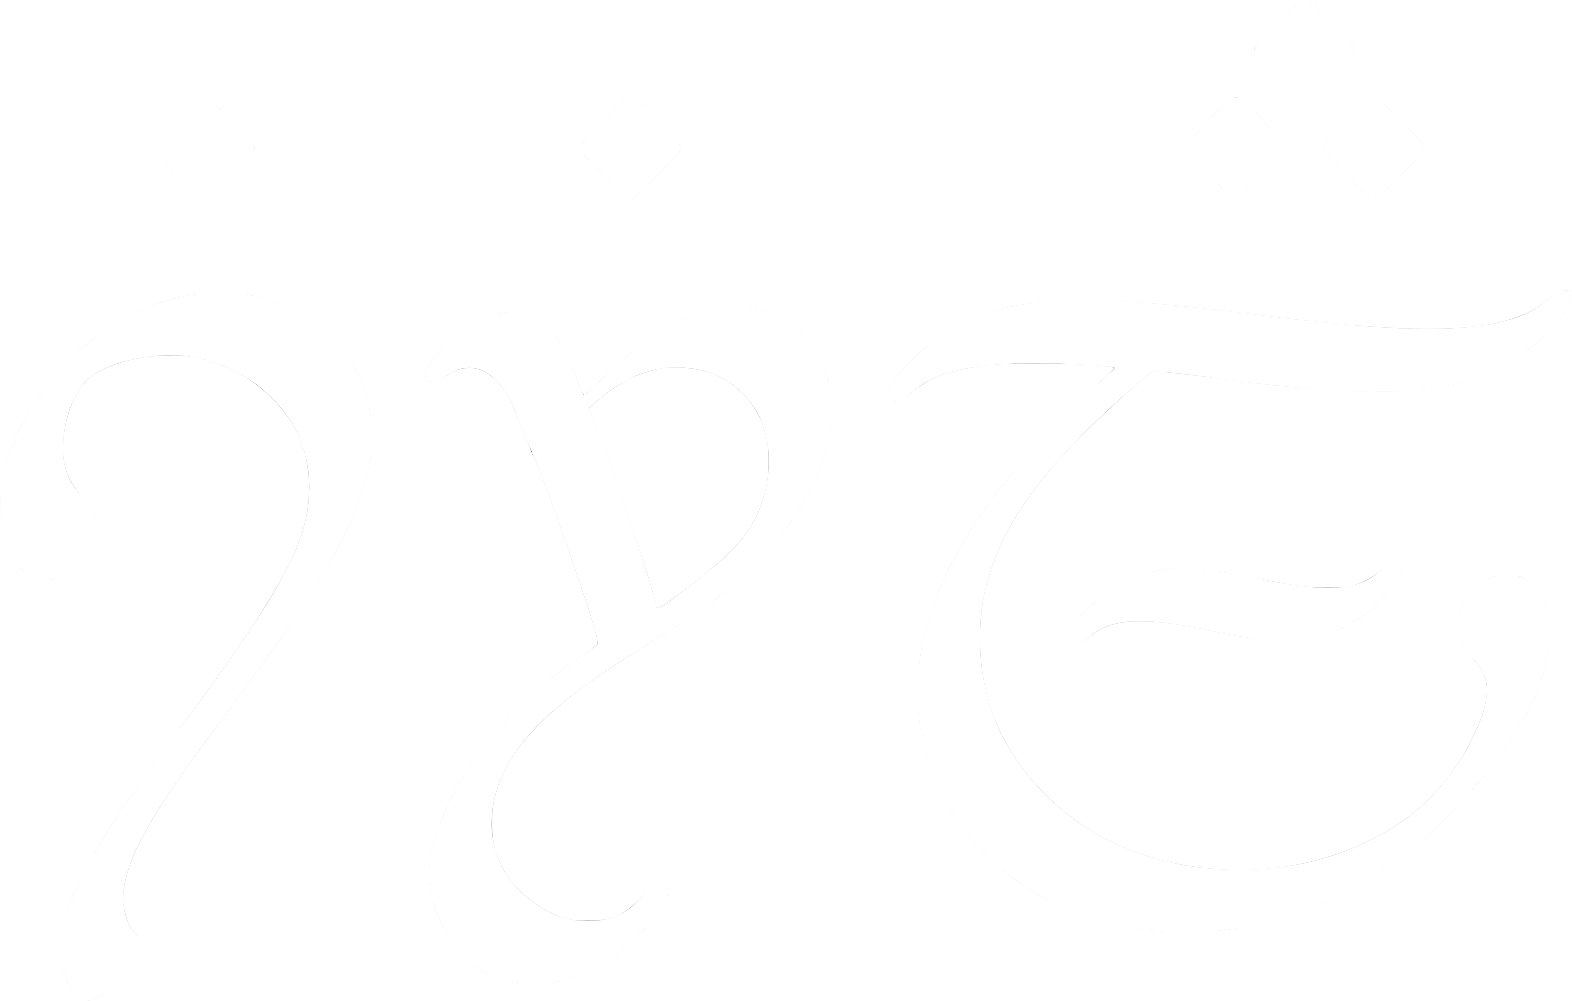 the word 'Sirilla' written using the Tengwar script in the Quenya mode